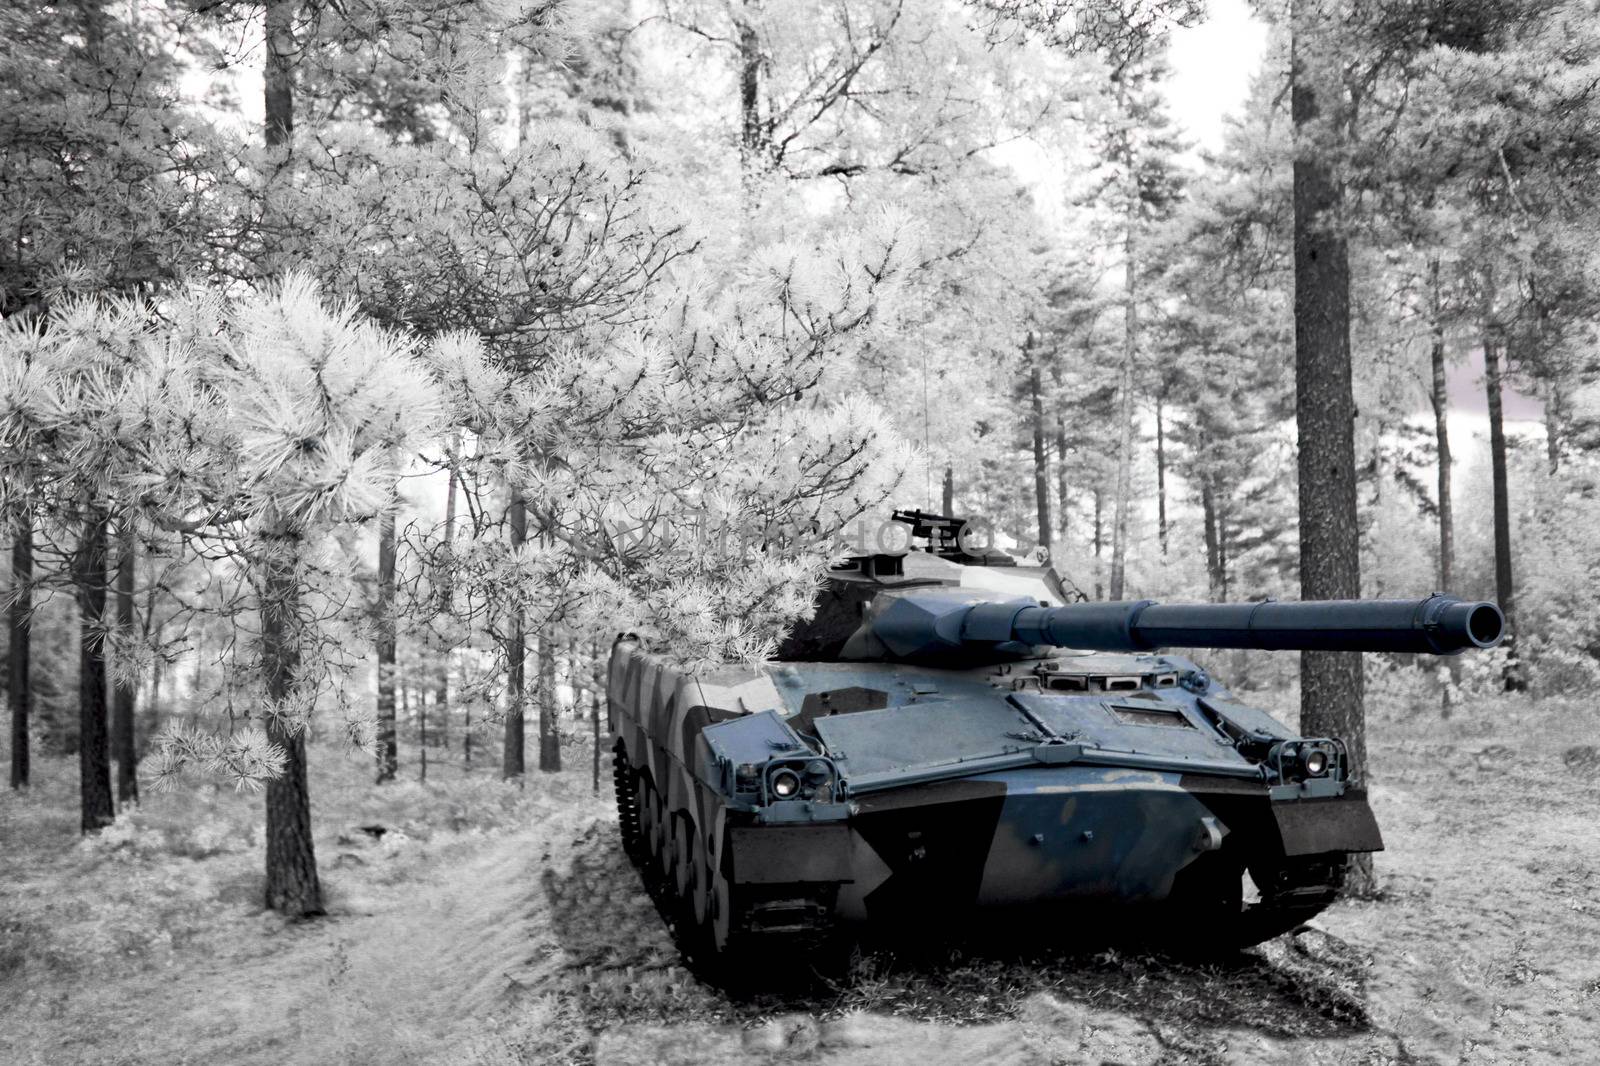 IKV 91 Tank Destroyer